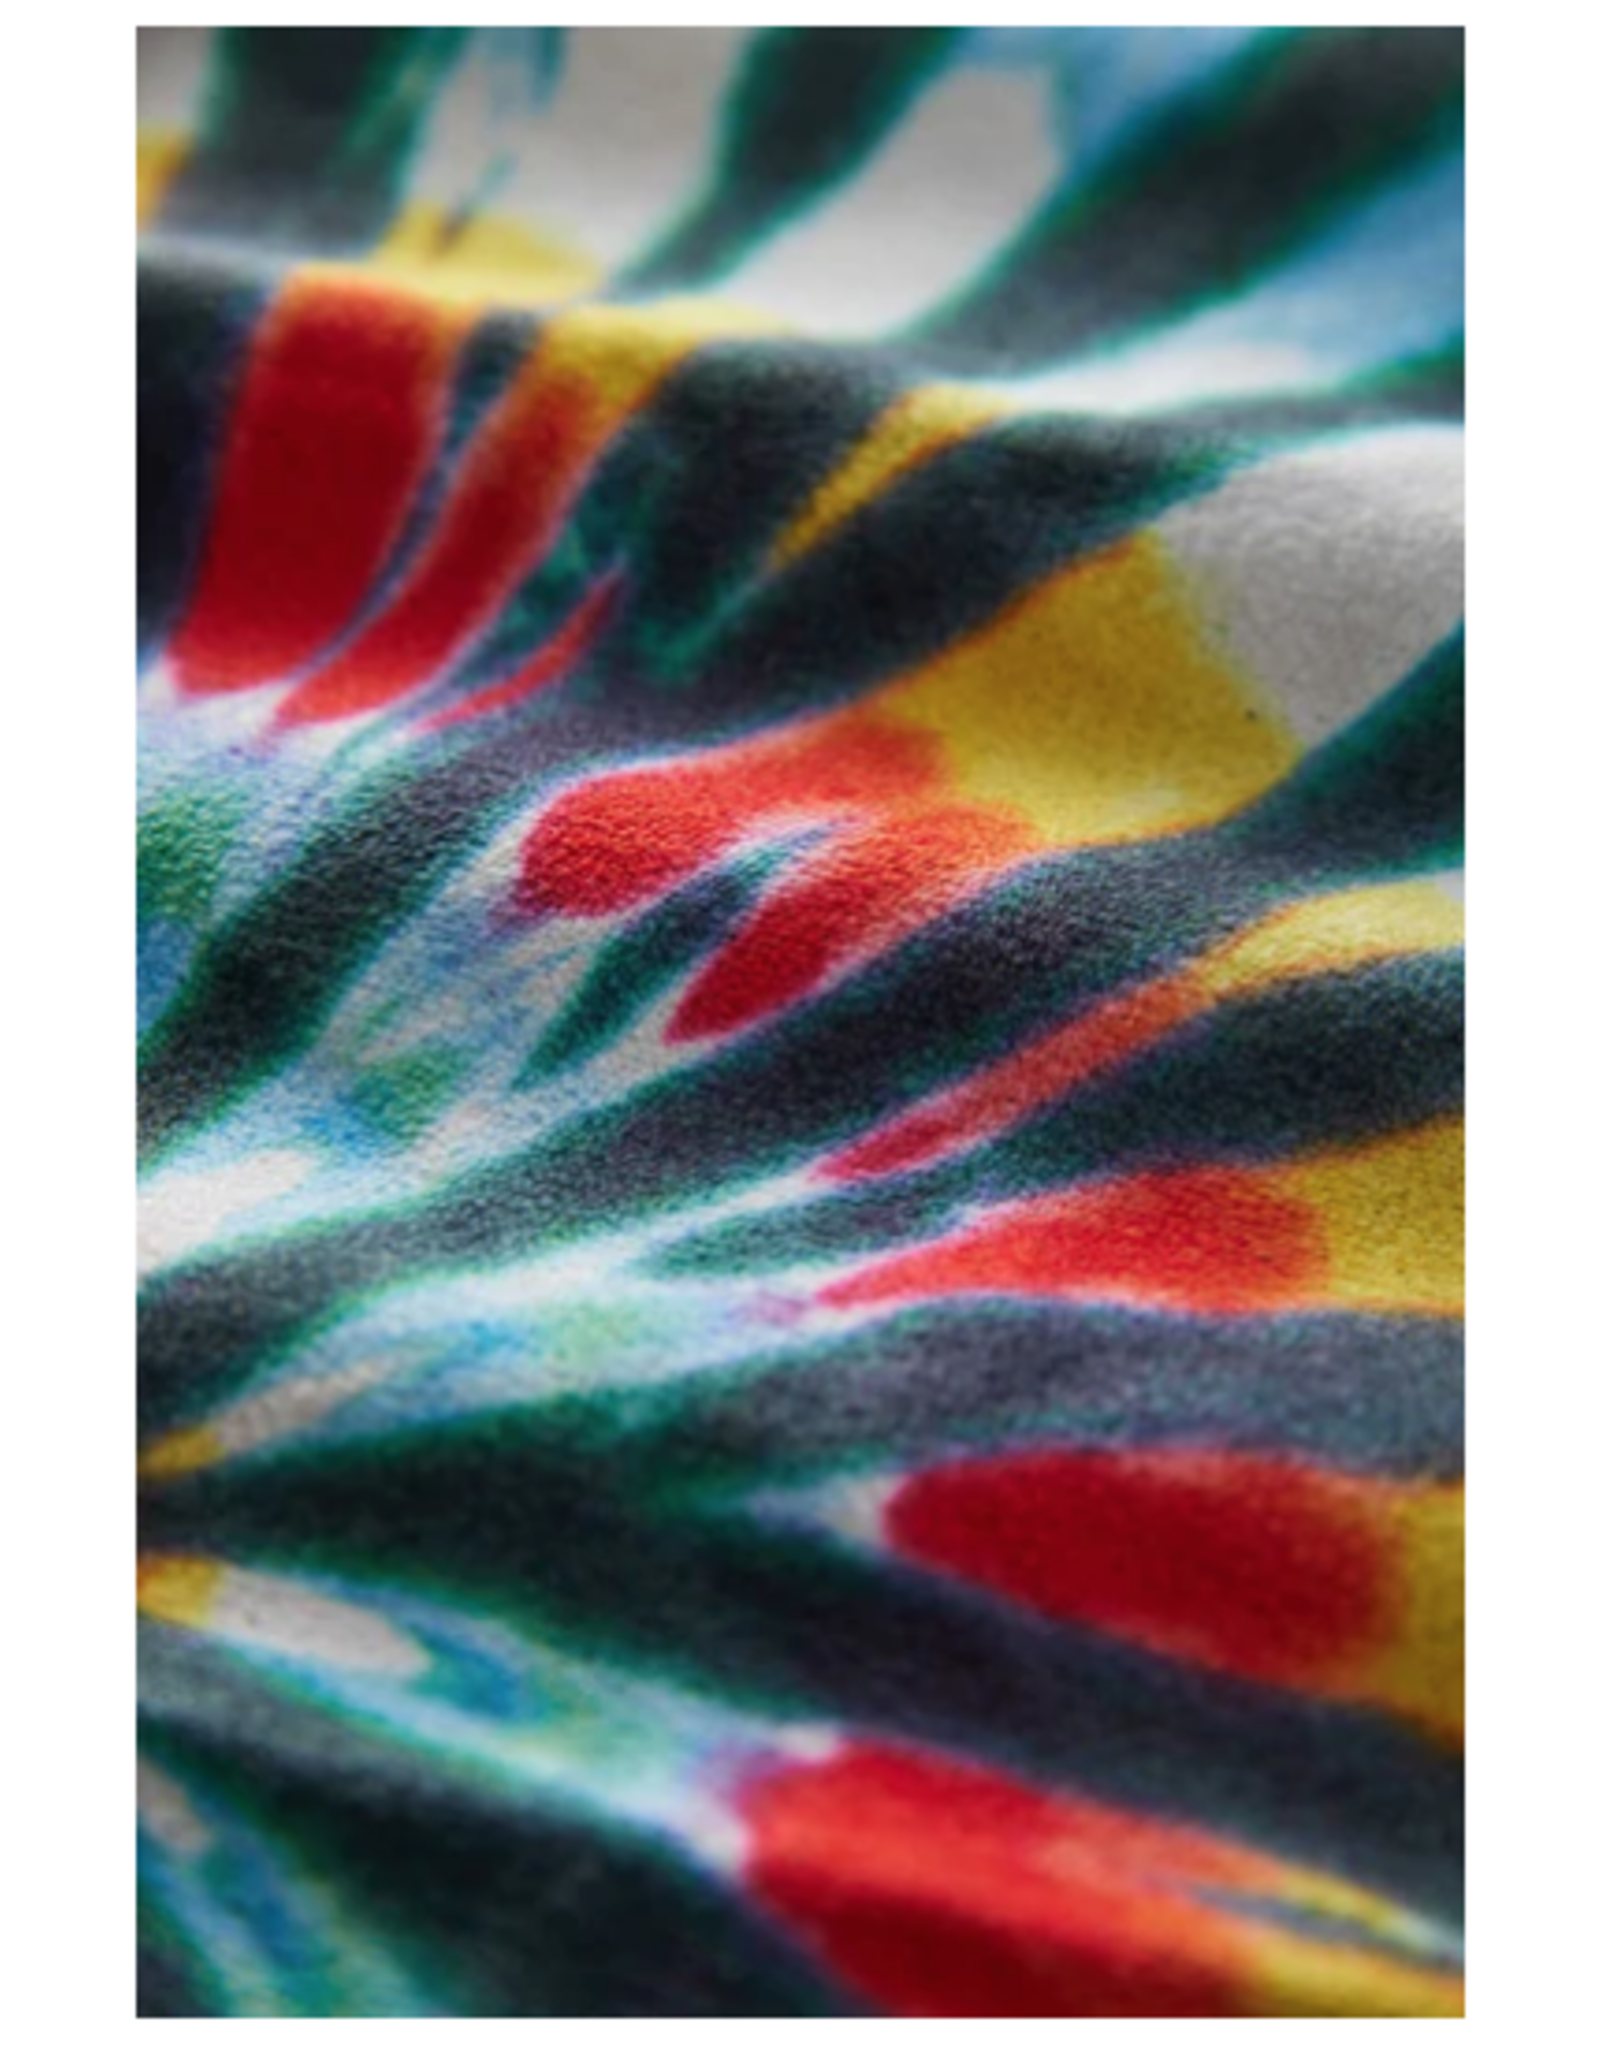 NOMADIX Original Towel: Tie-Dye Multi